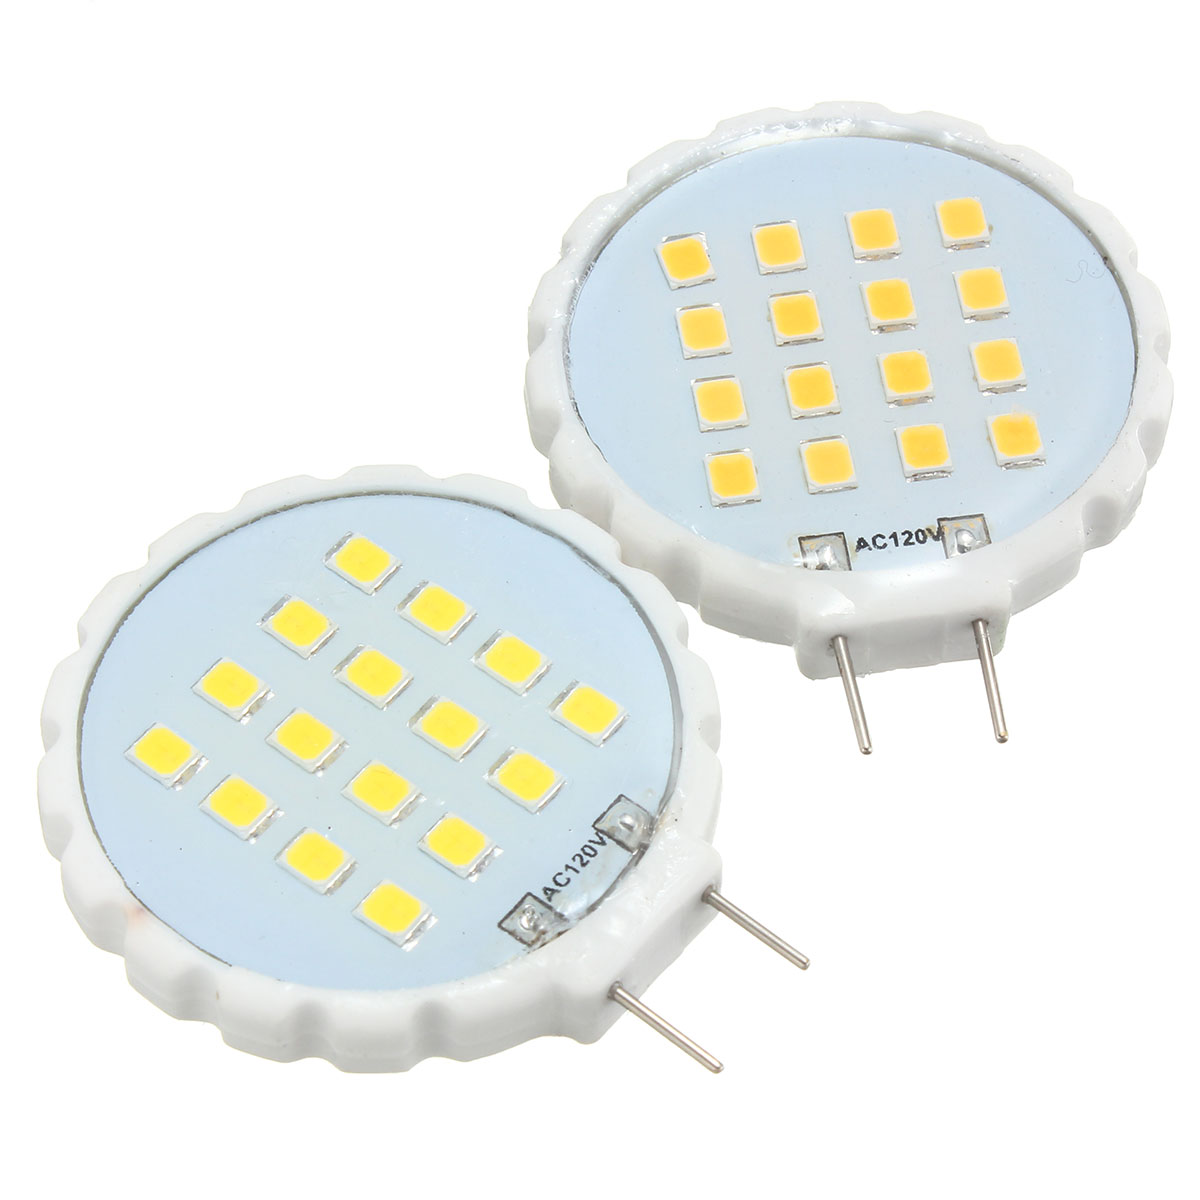 G8-13W-16-SMD-2835-LED-Pure-White-Warm-White-Ceramic-Material-Home-Lighting-Bulb-AC110V-1062194-5